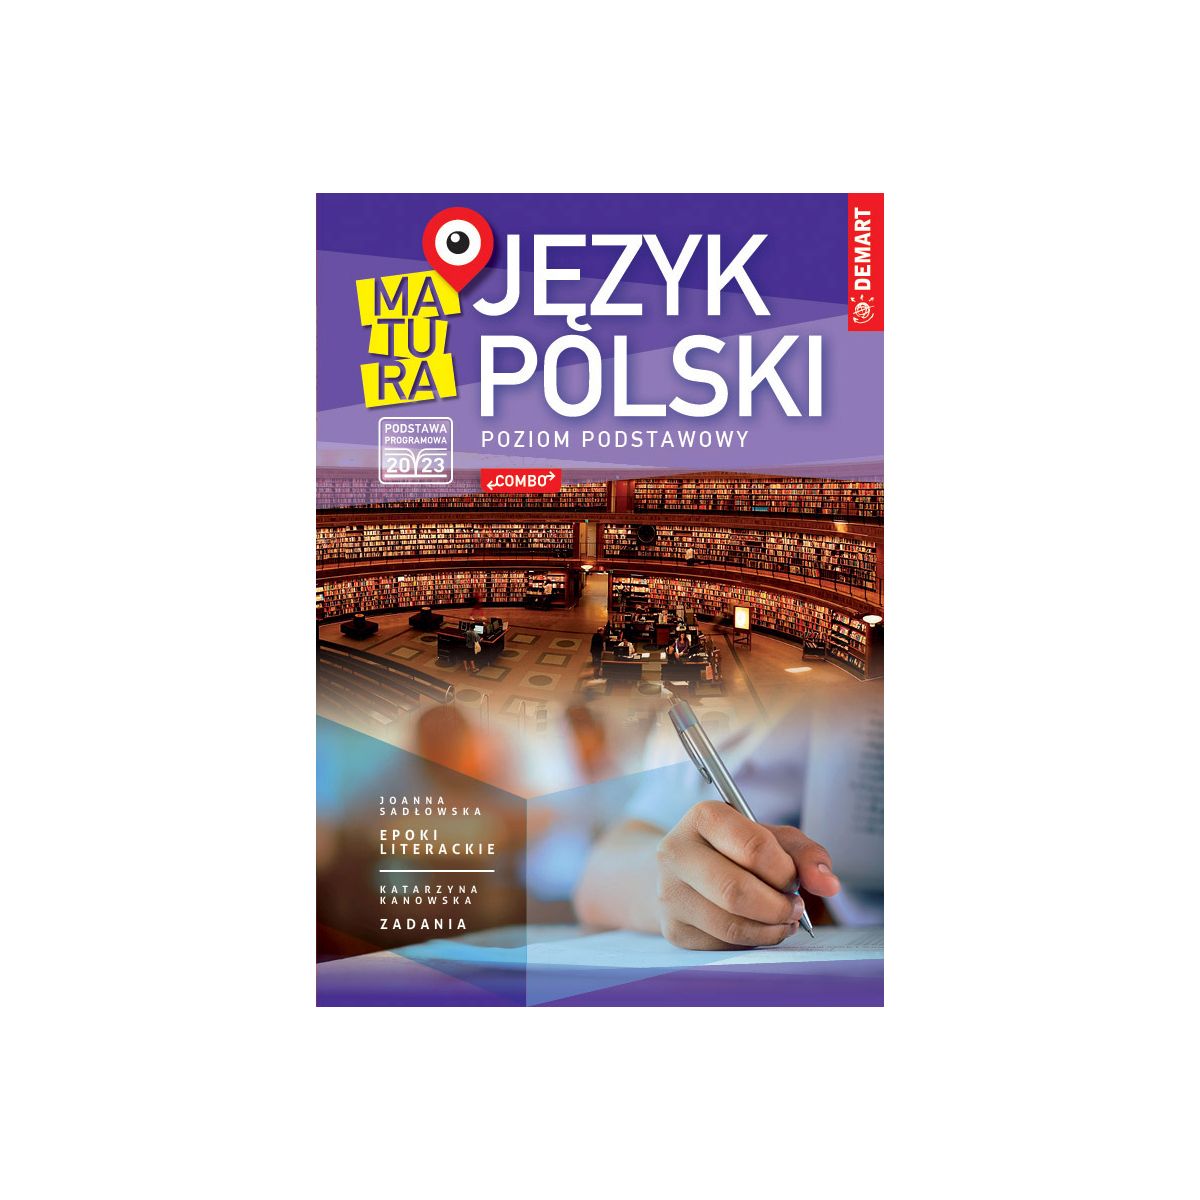 Książeczka edukacyjna Polski - Vademecum maturalne Demart